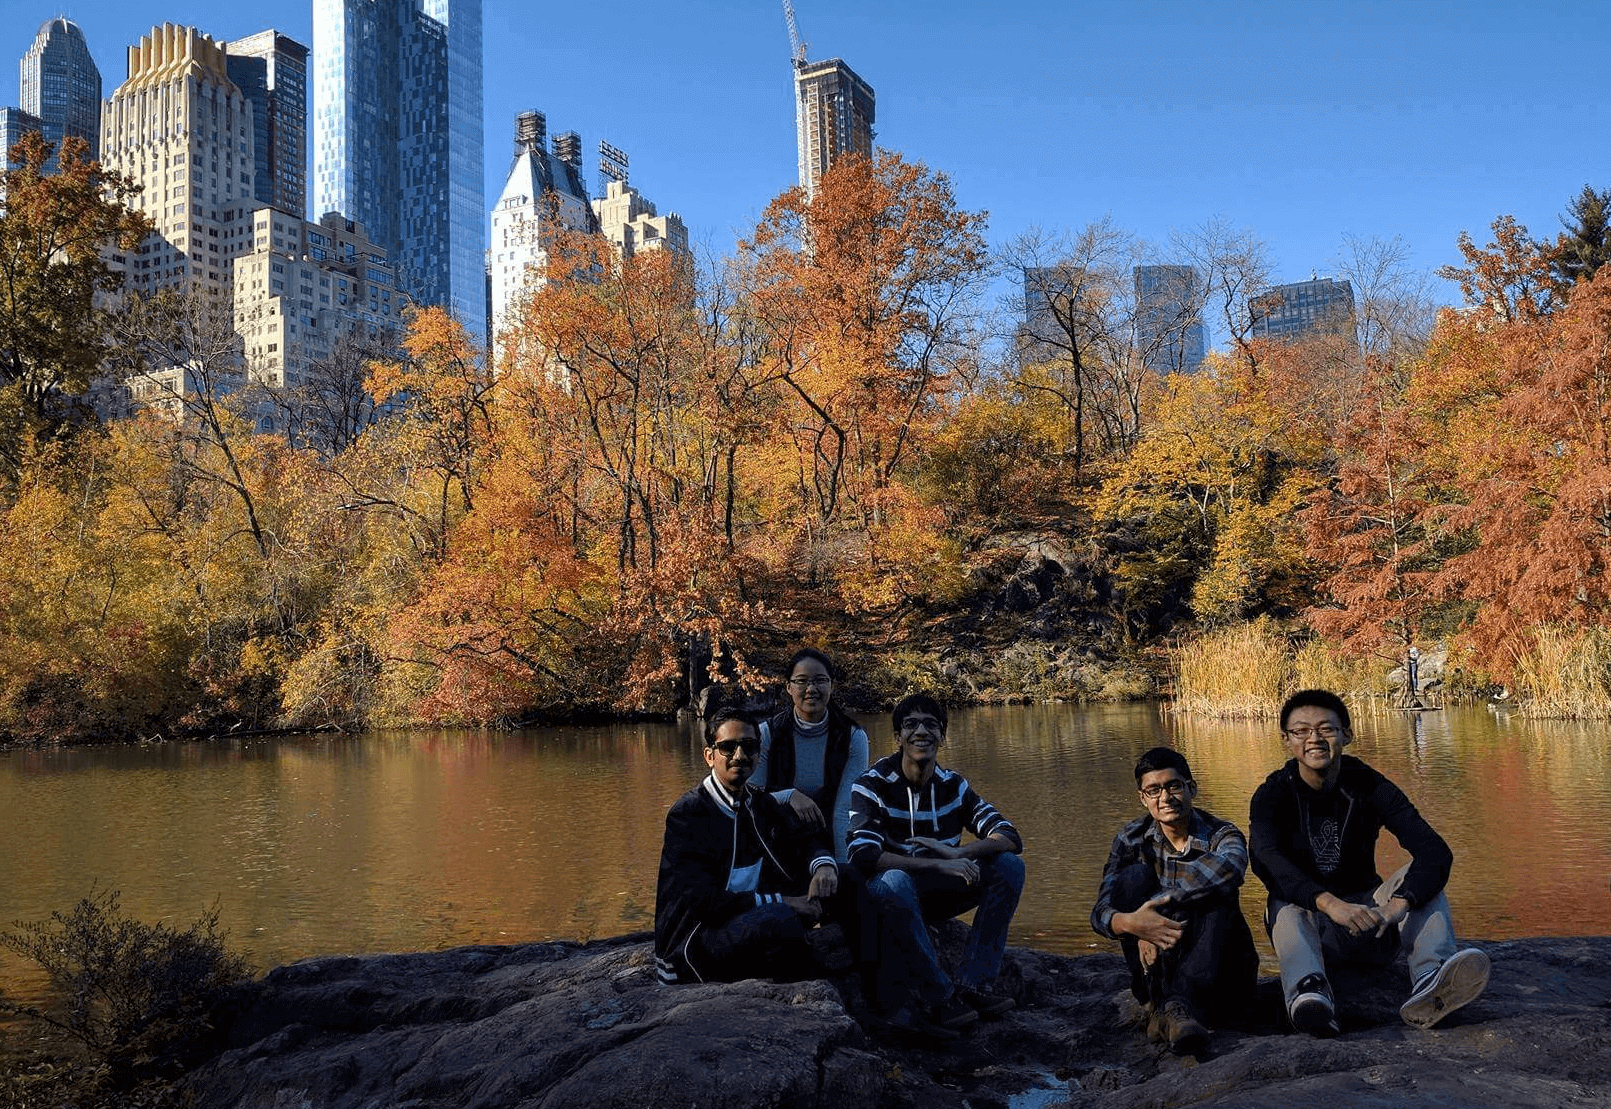 New York Central Park